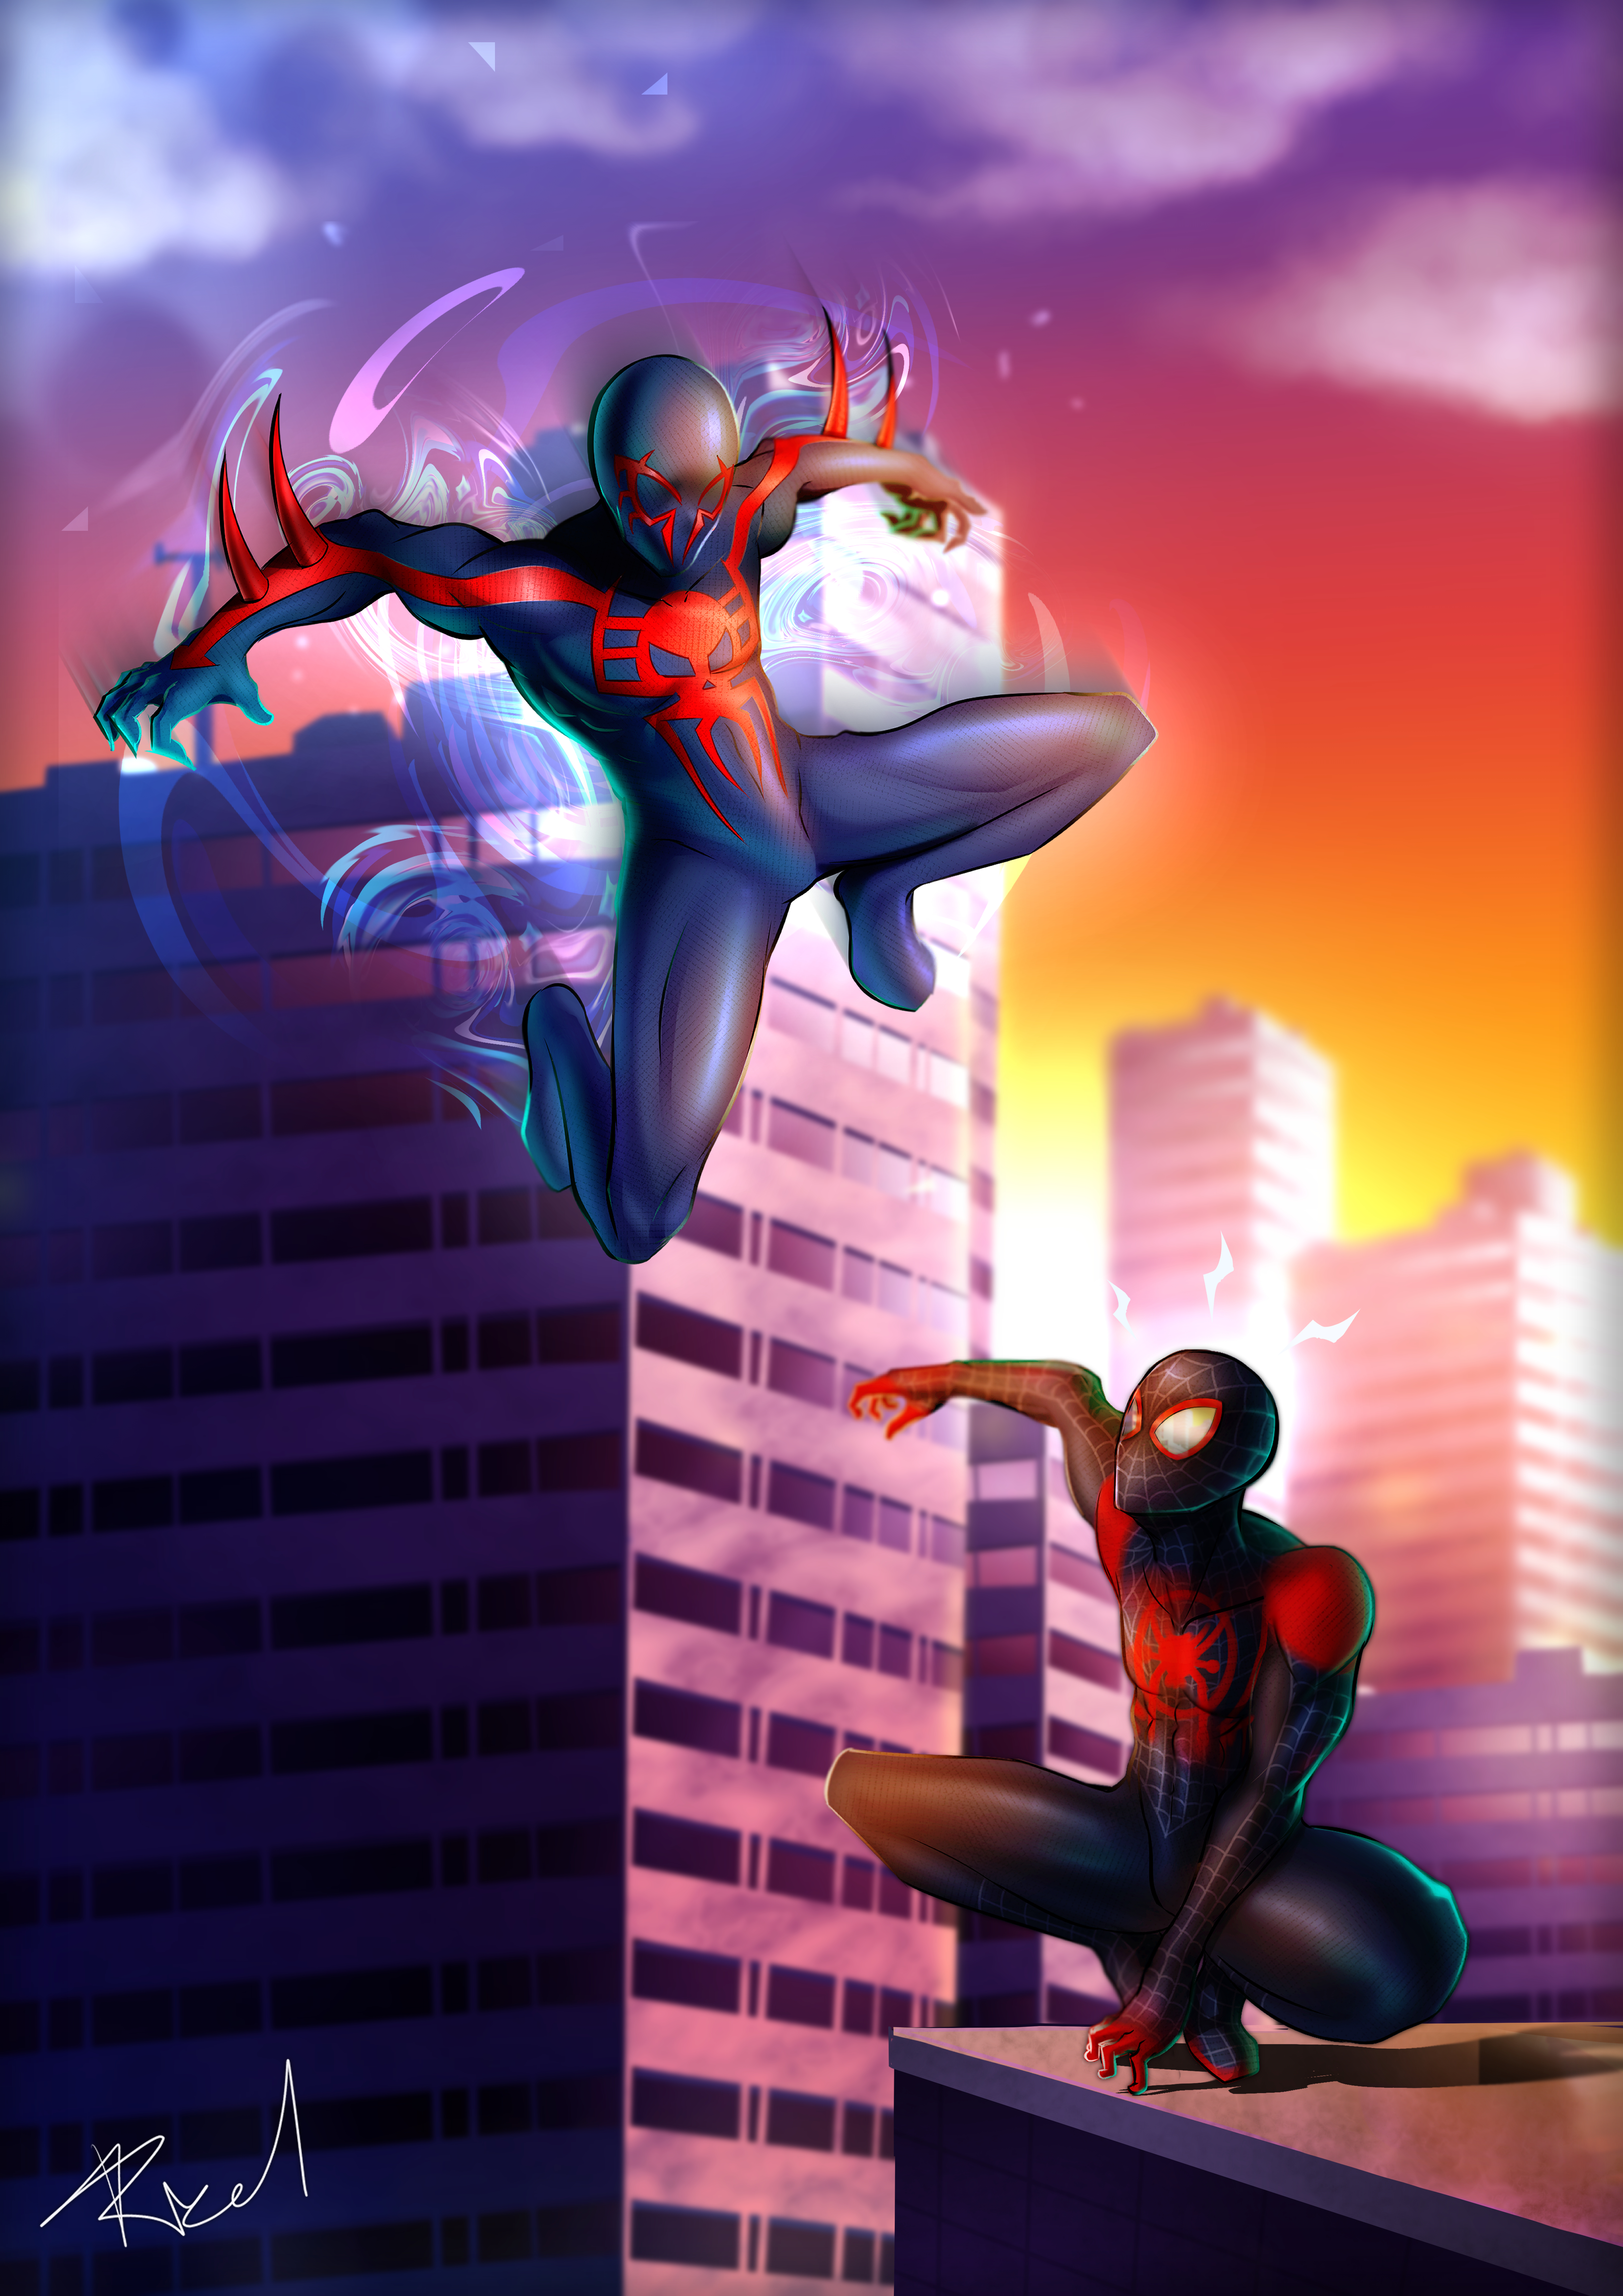 Spiderpunk - Across the Spiderverse by reneallan on DeviantArt